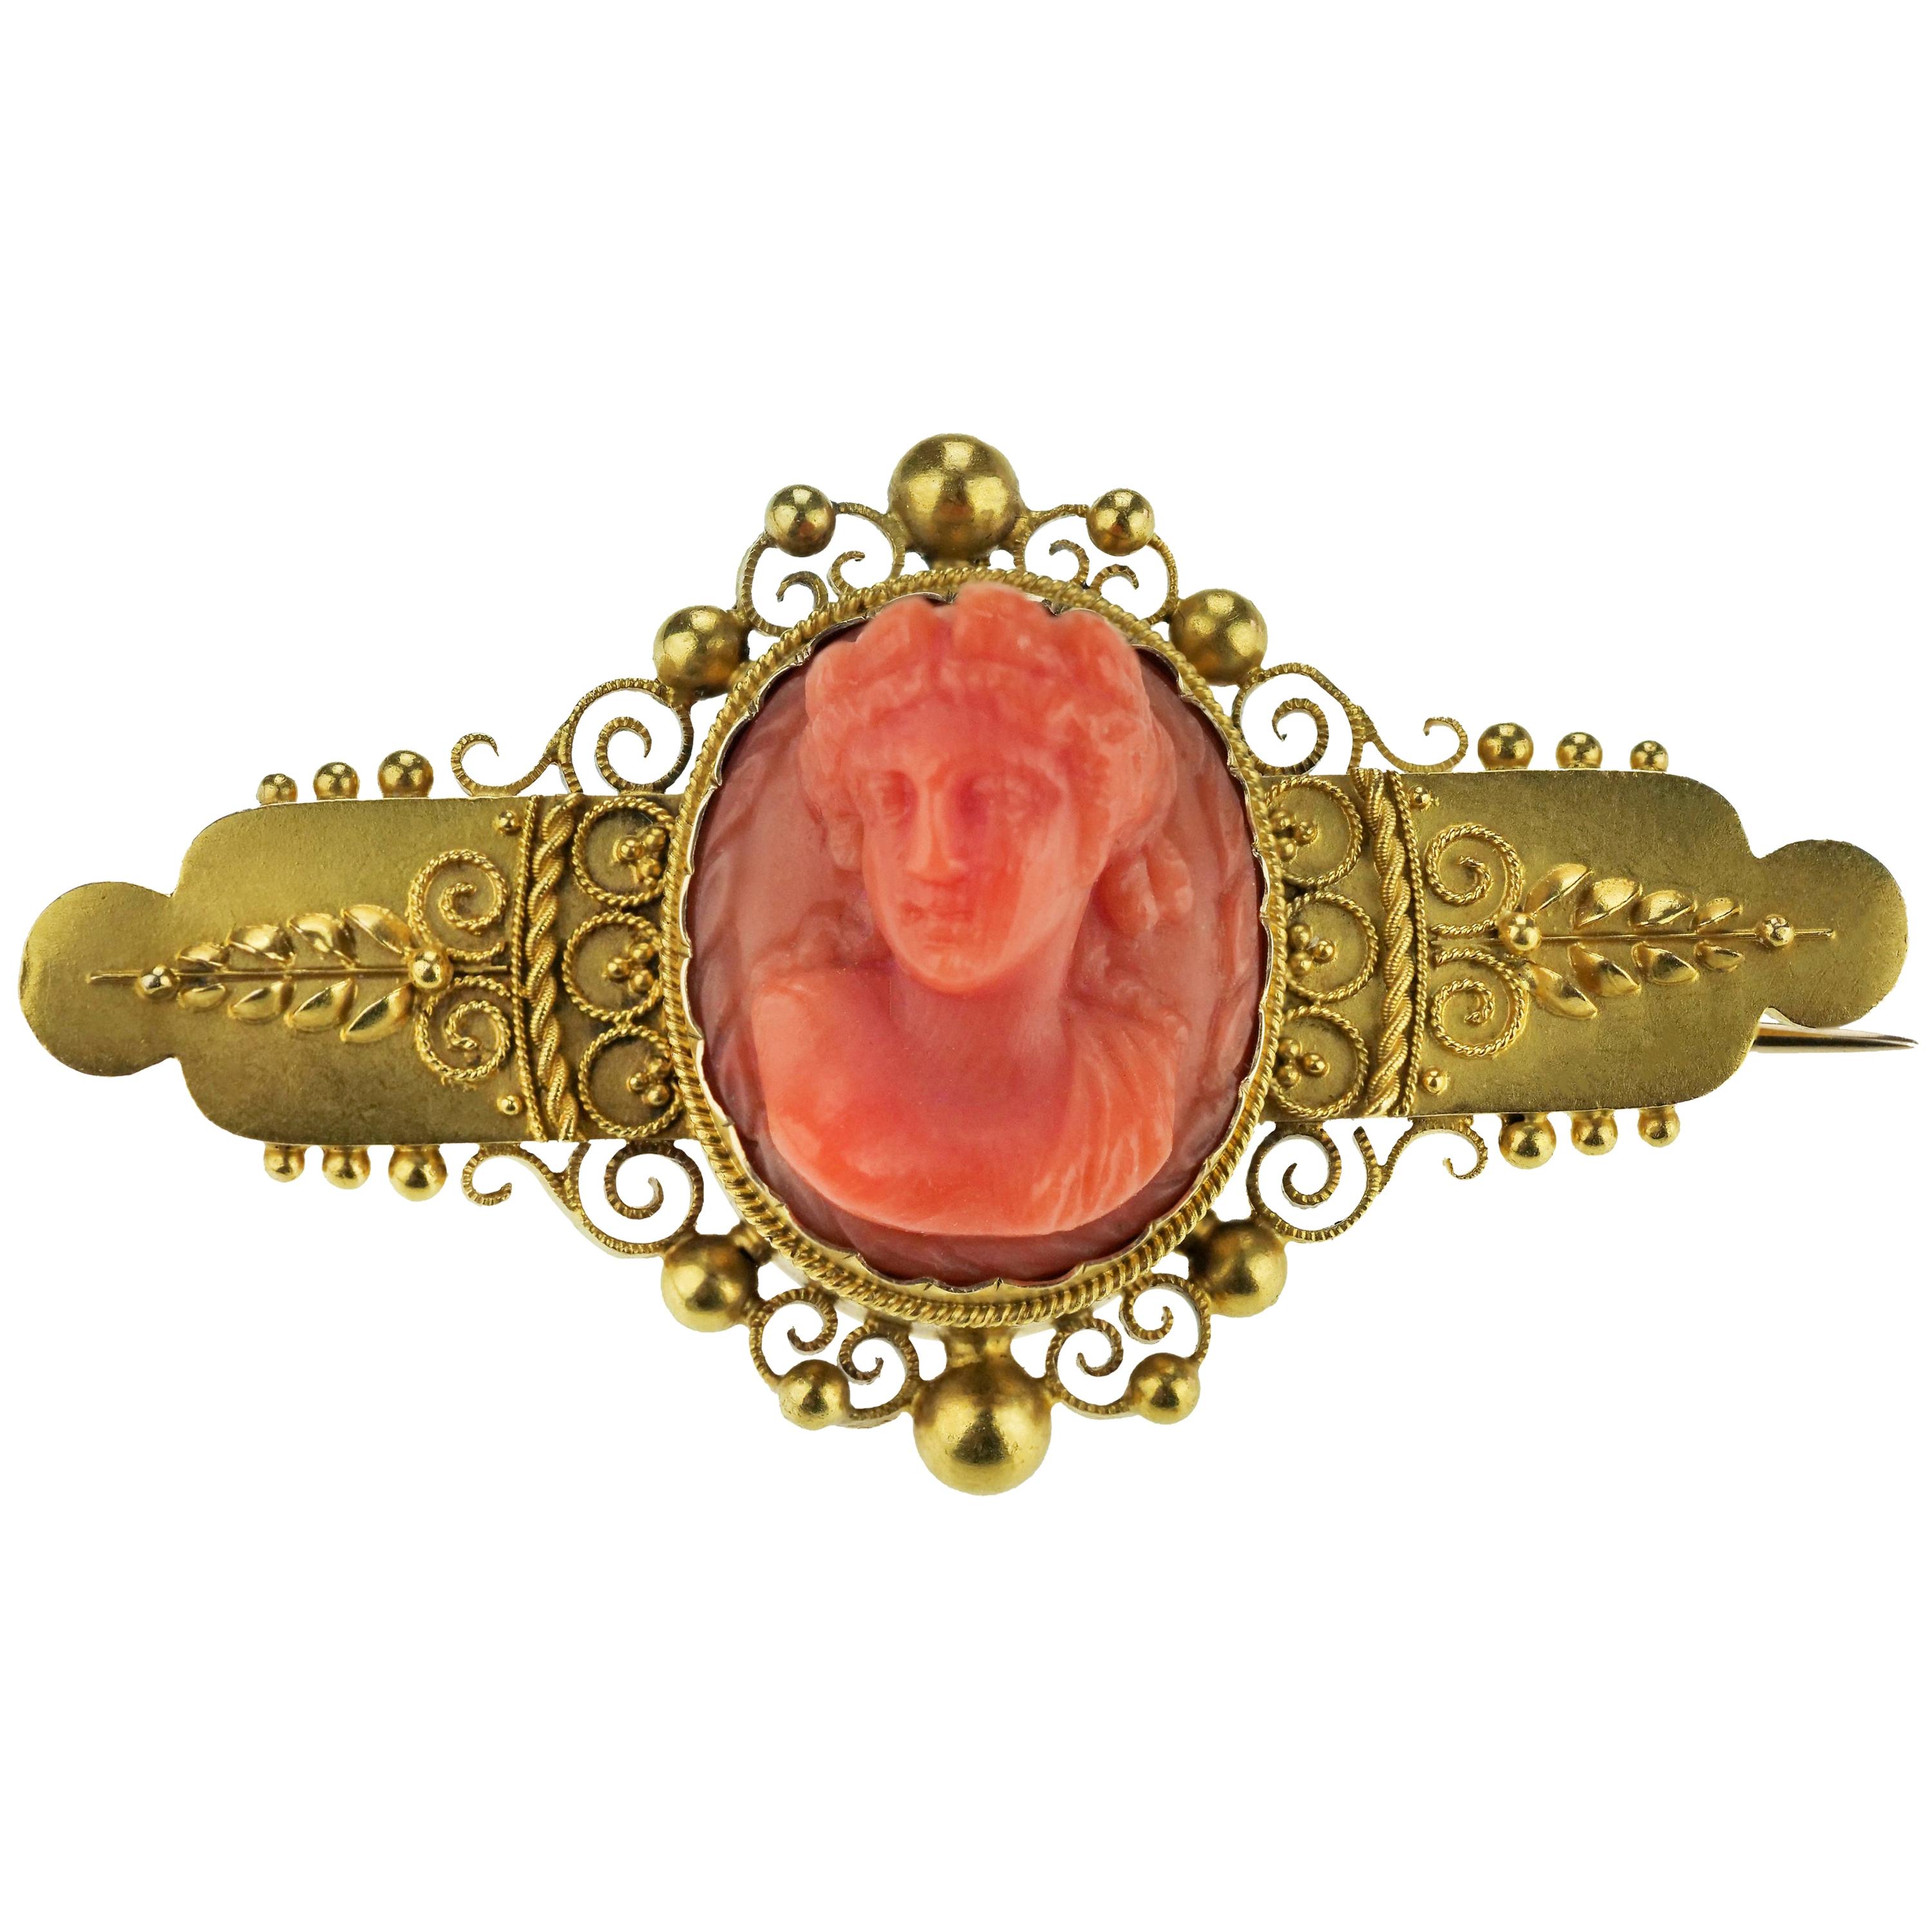 Antique Victorian gold brooch